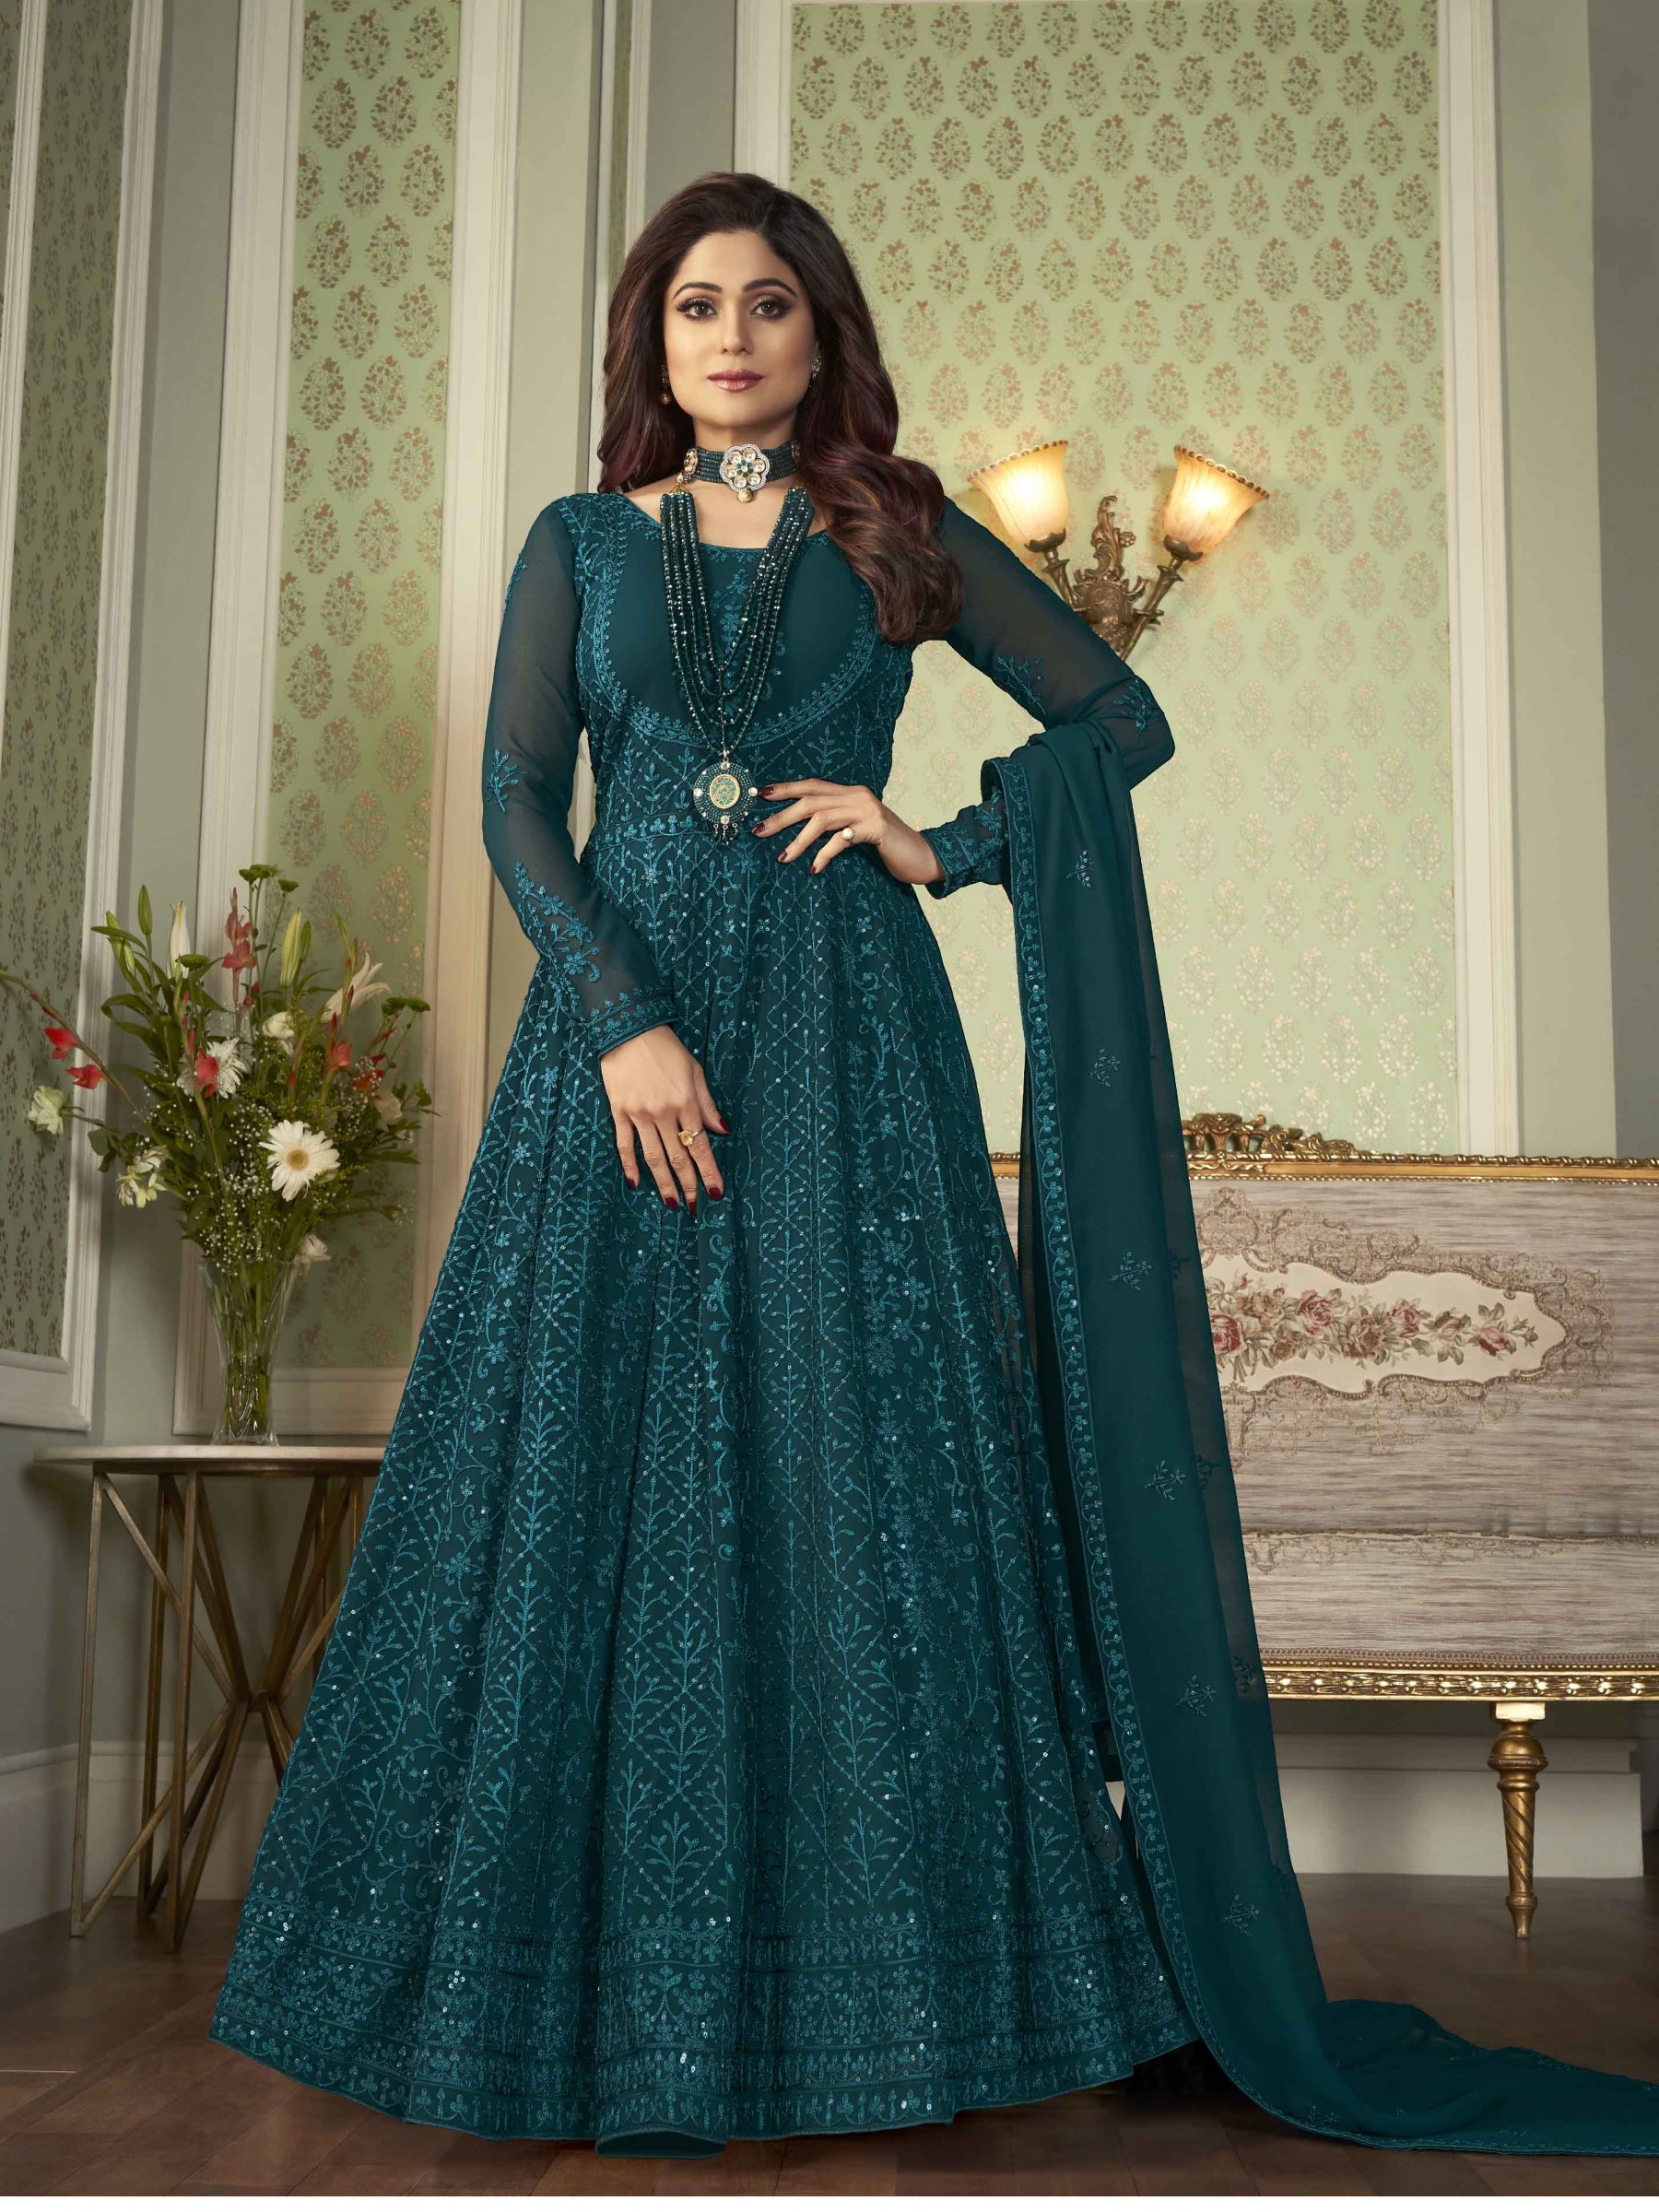 Evening Blue Mexi Gown Wedding Wear Indian Bollywood Lehenga Long Length  Dress | eBay